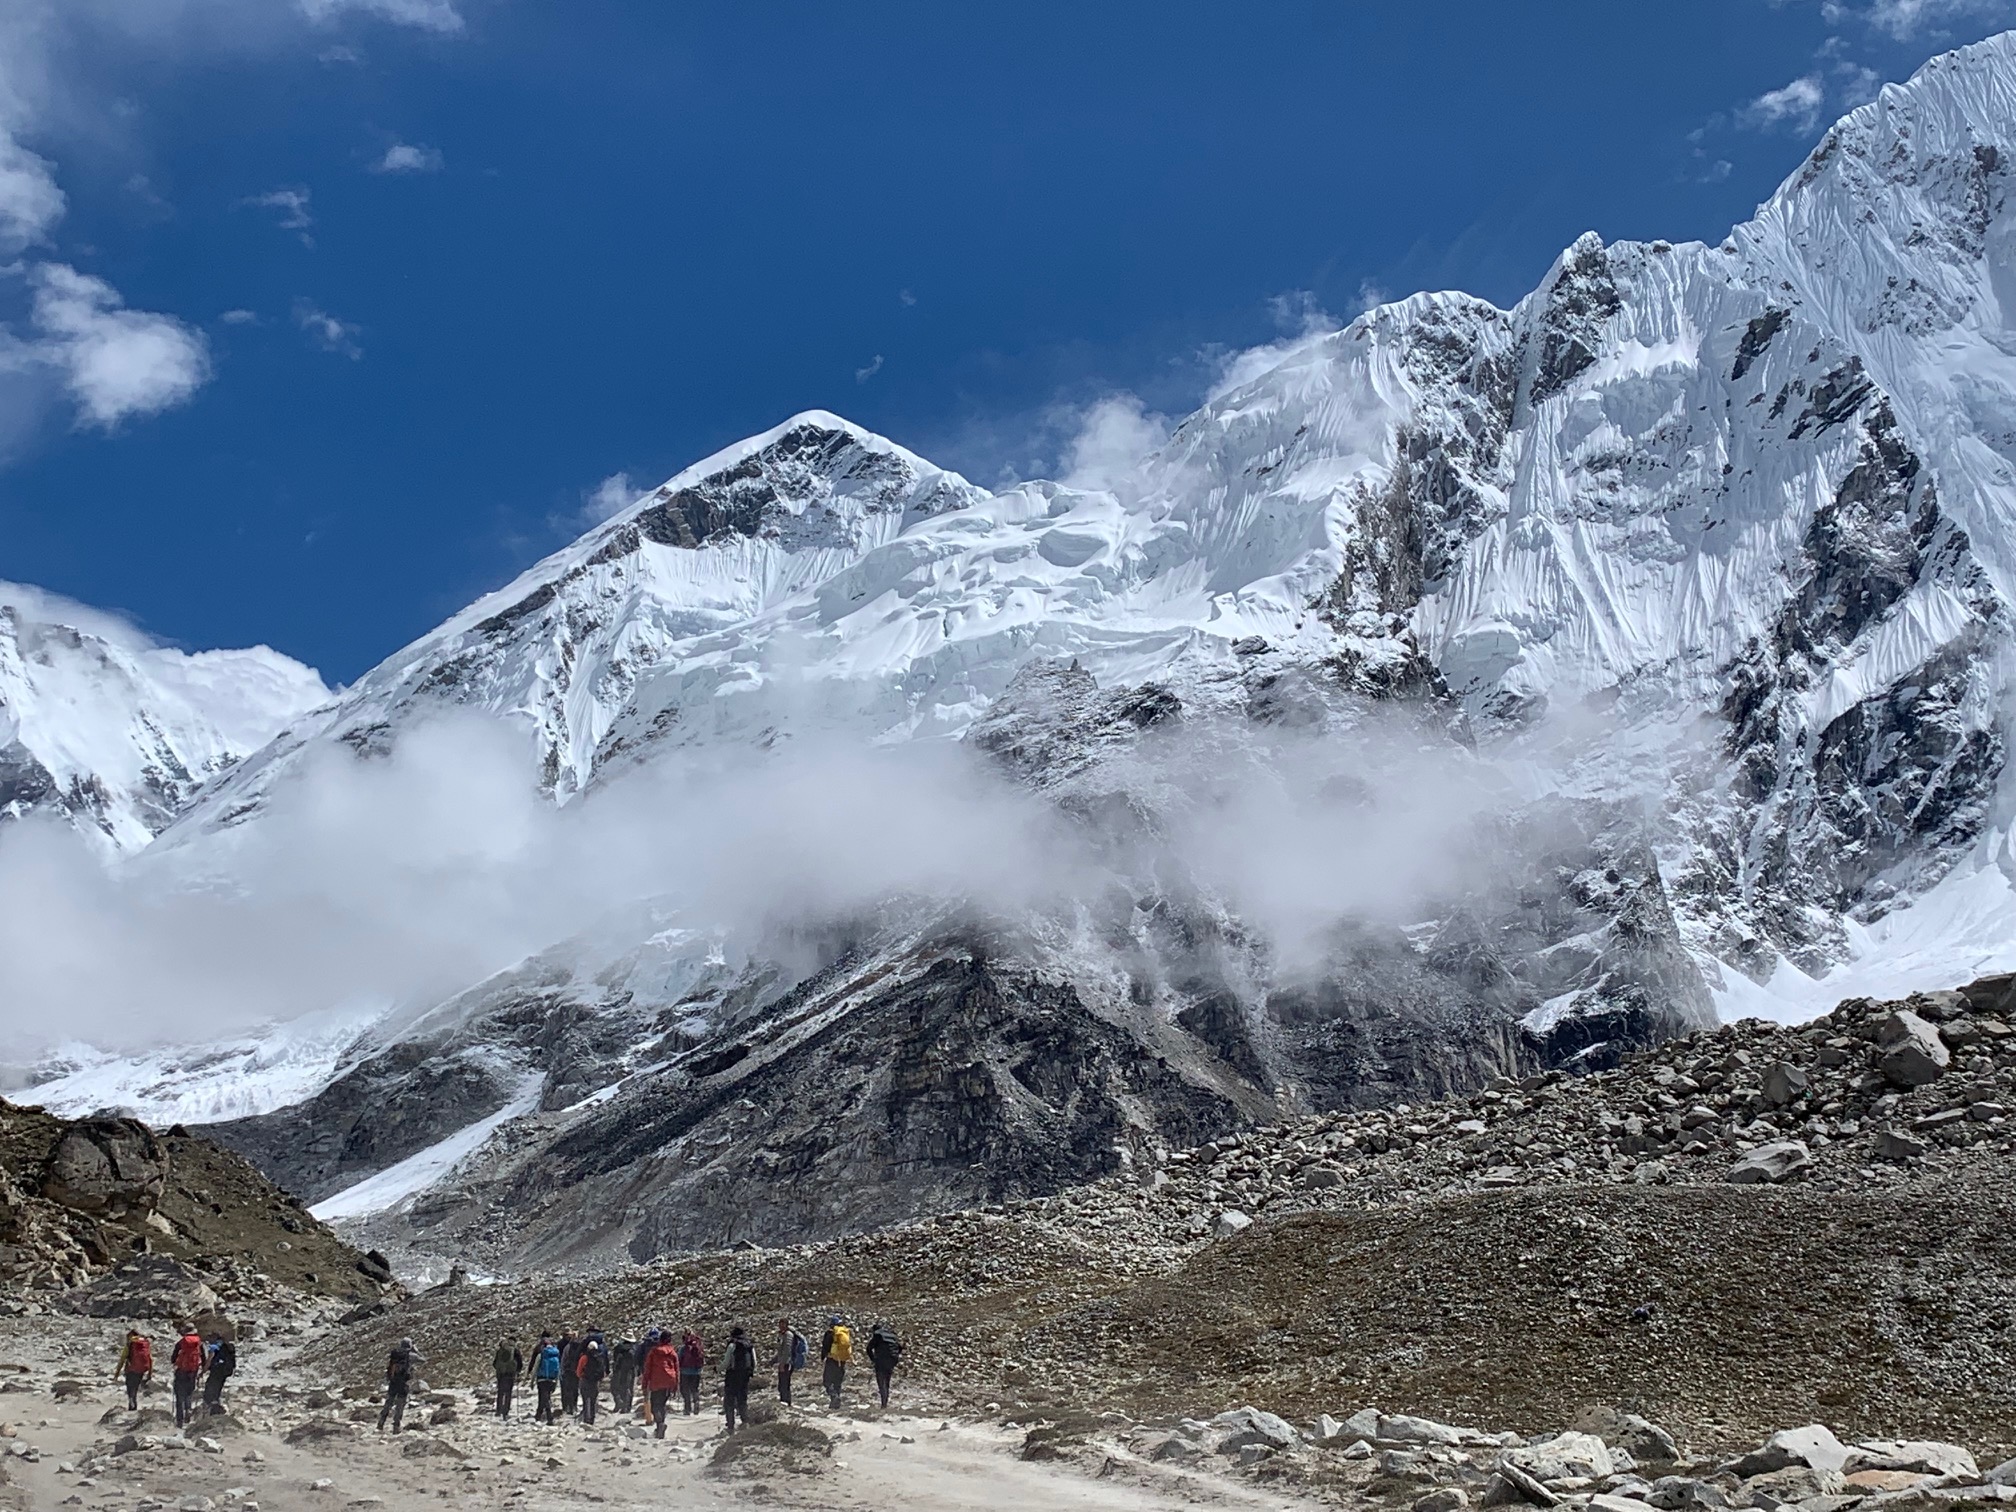 Trekking into Everest Base Camp.